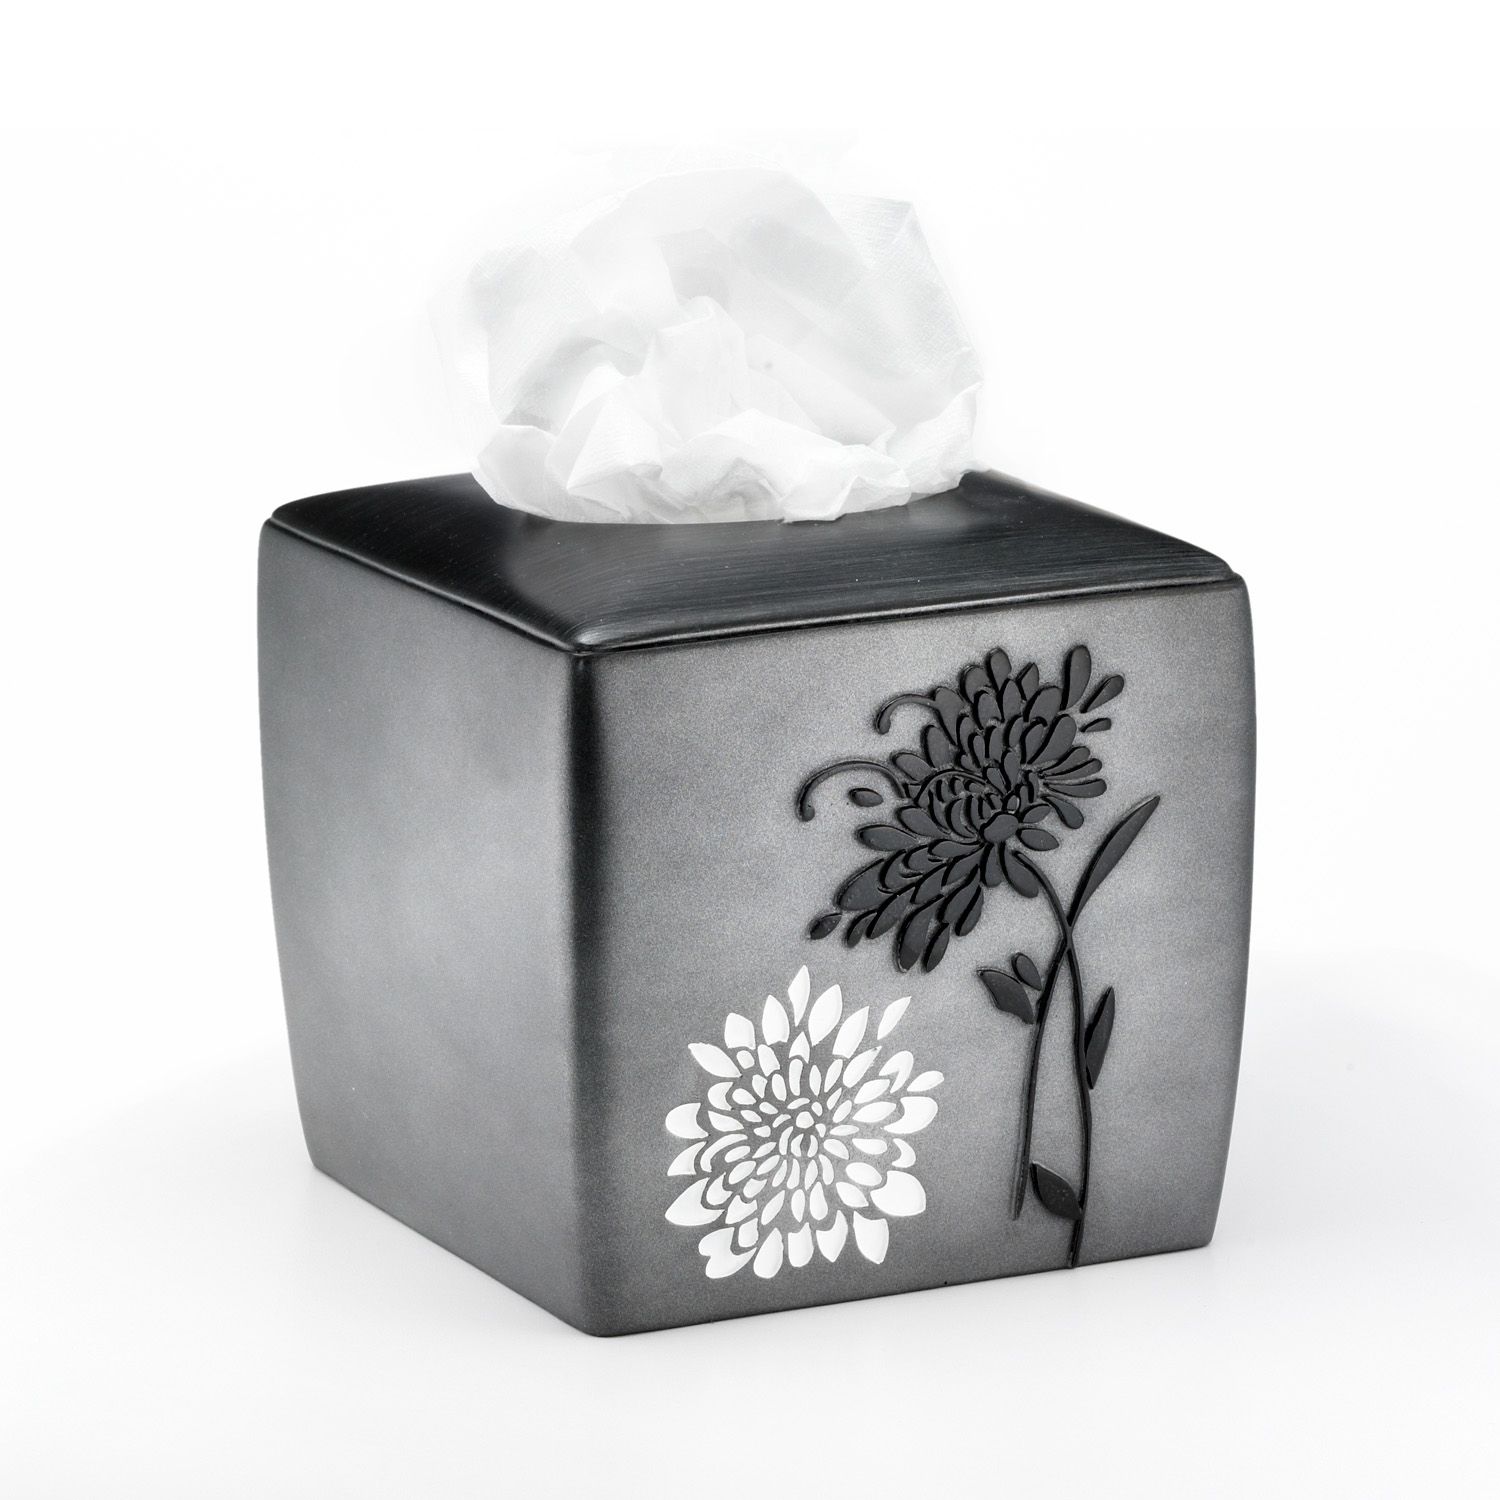 Popular Bath Products Erica tissue box